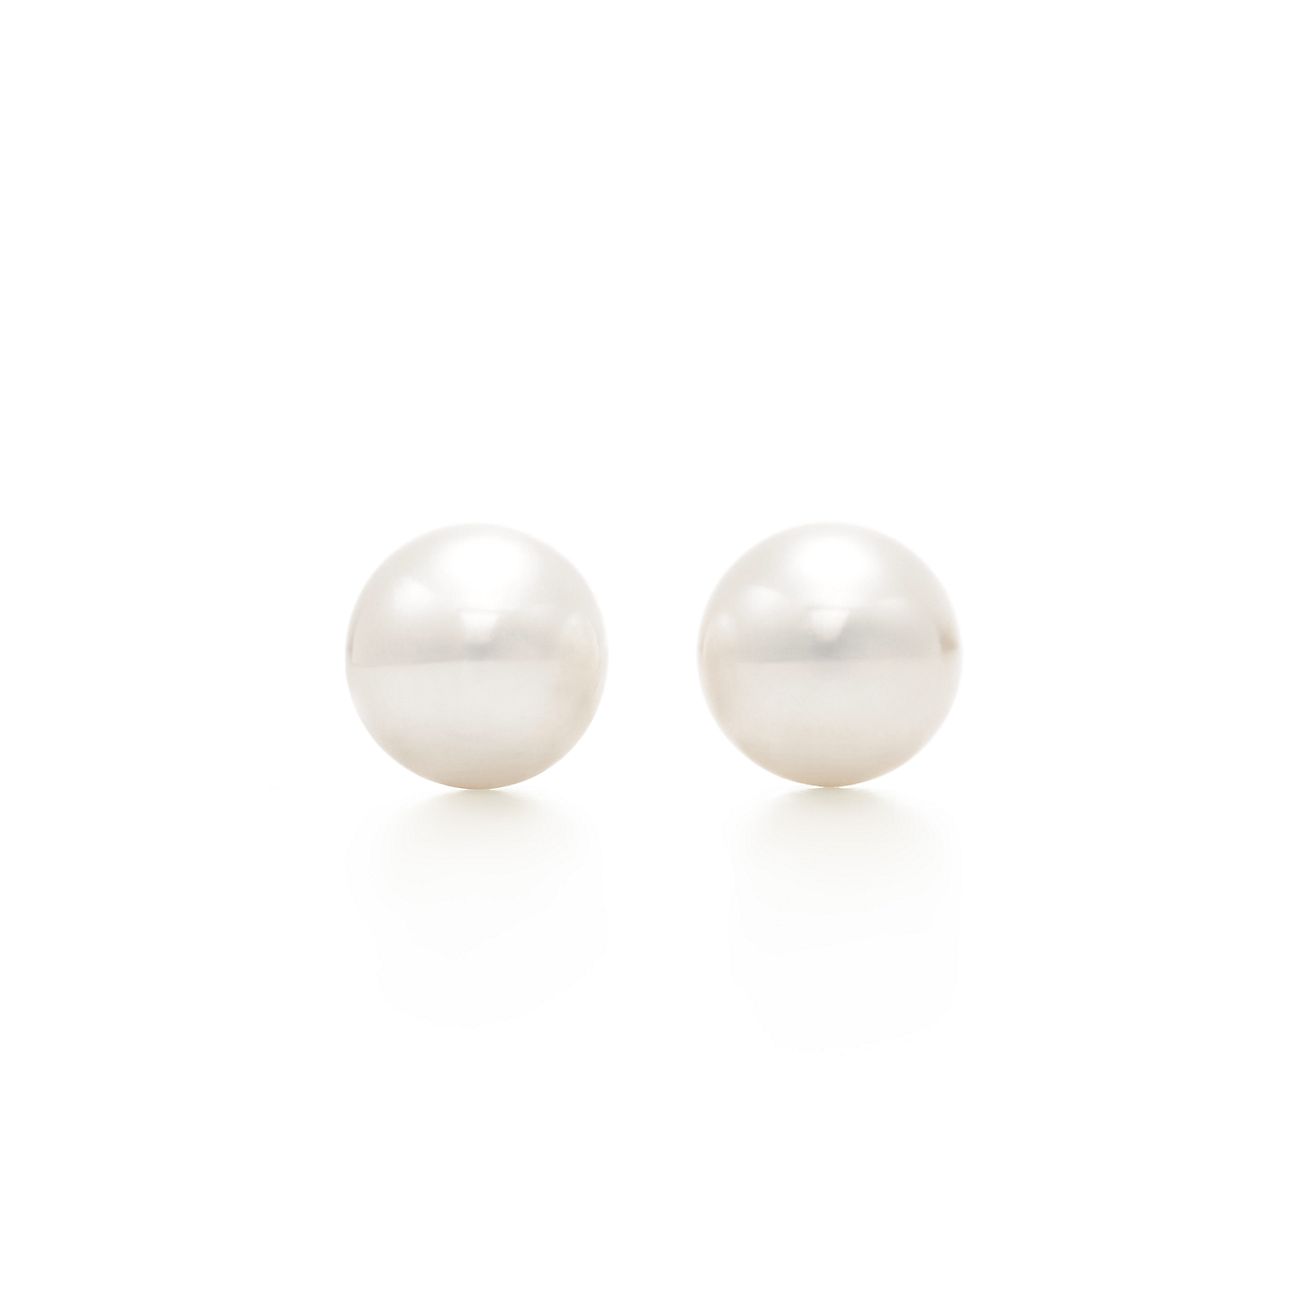 pearl earrings canada